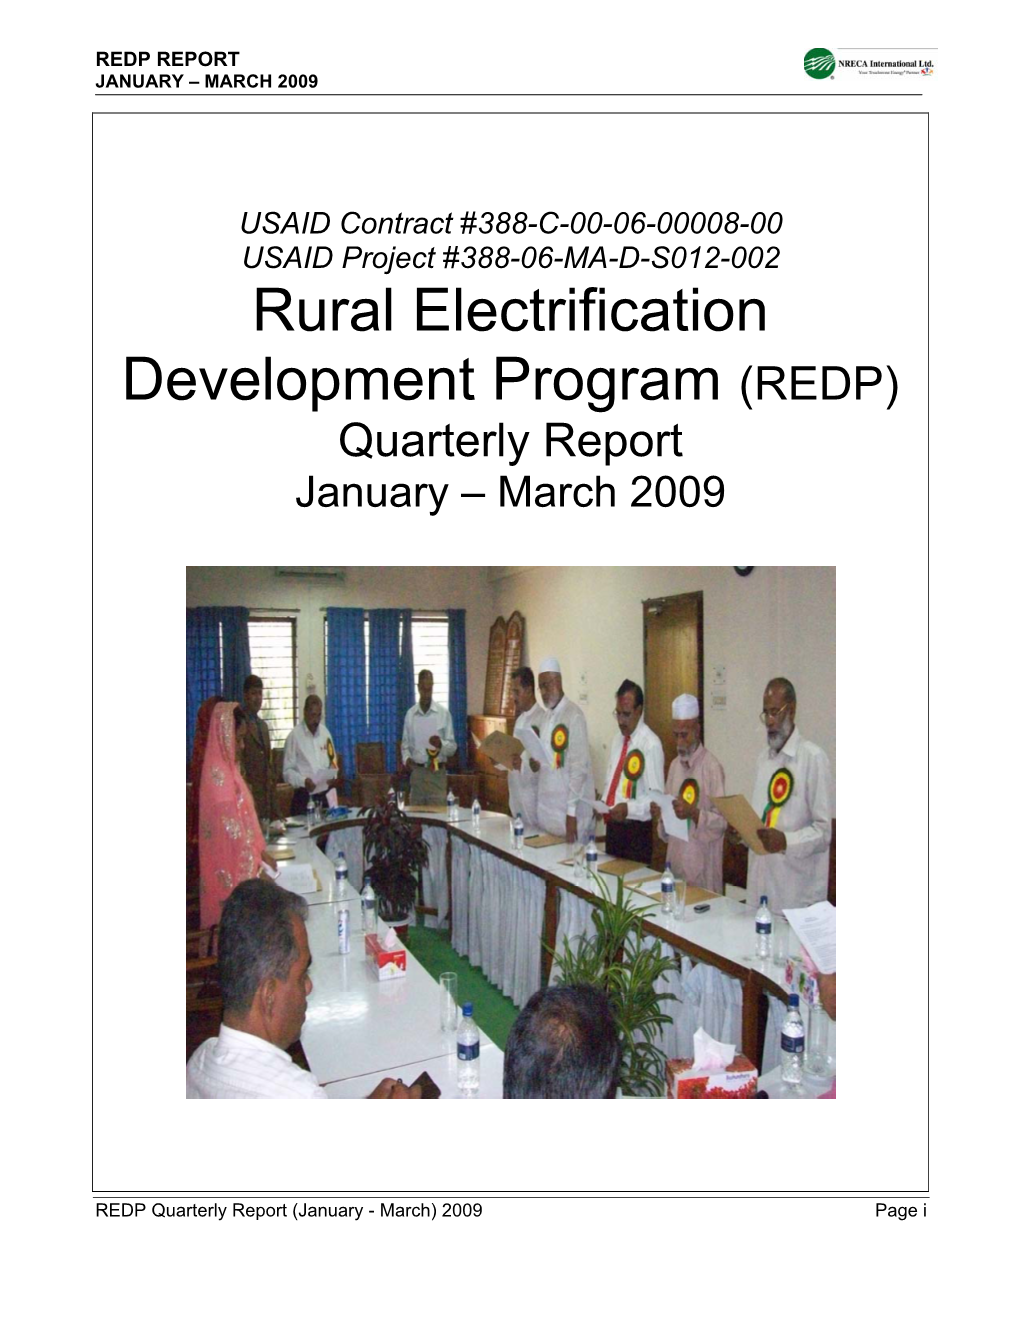 Rural Electrification Development Program (REDP) Quarterly Report January – March 2009